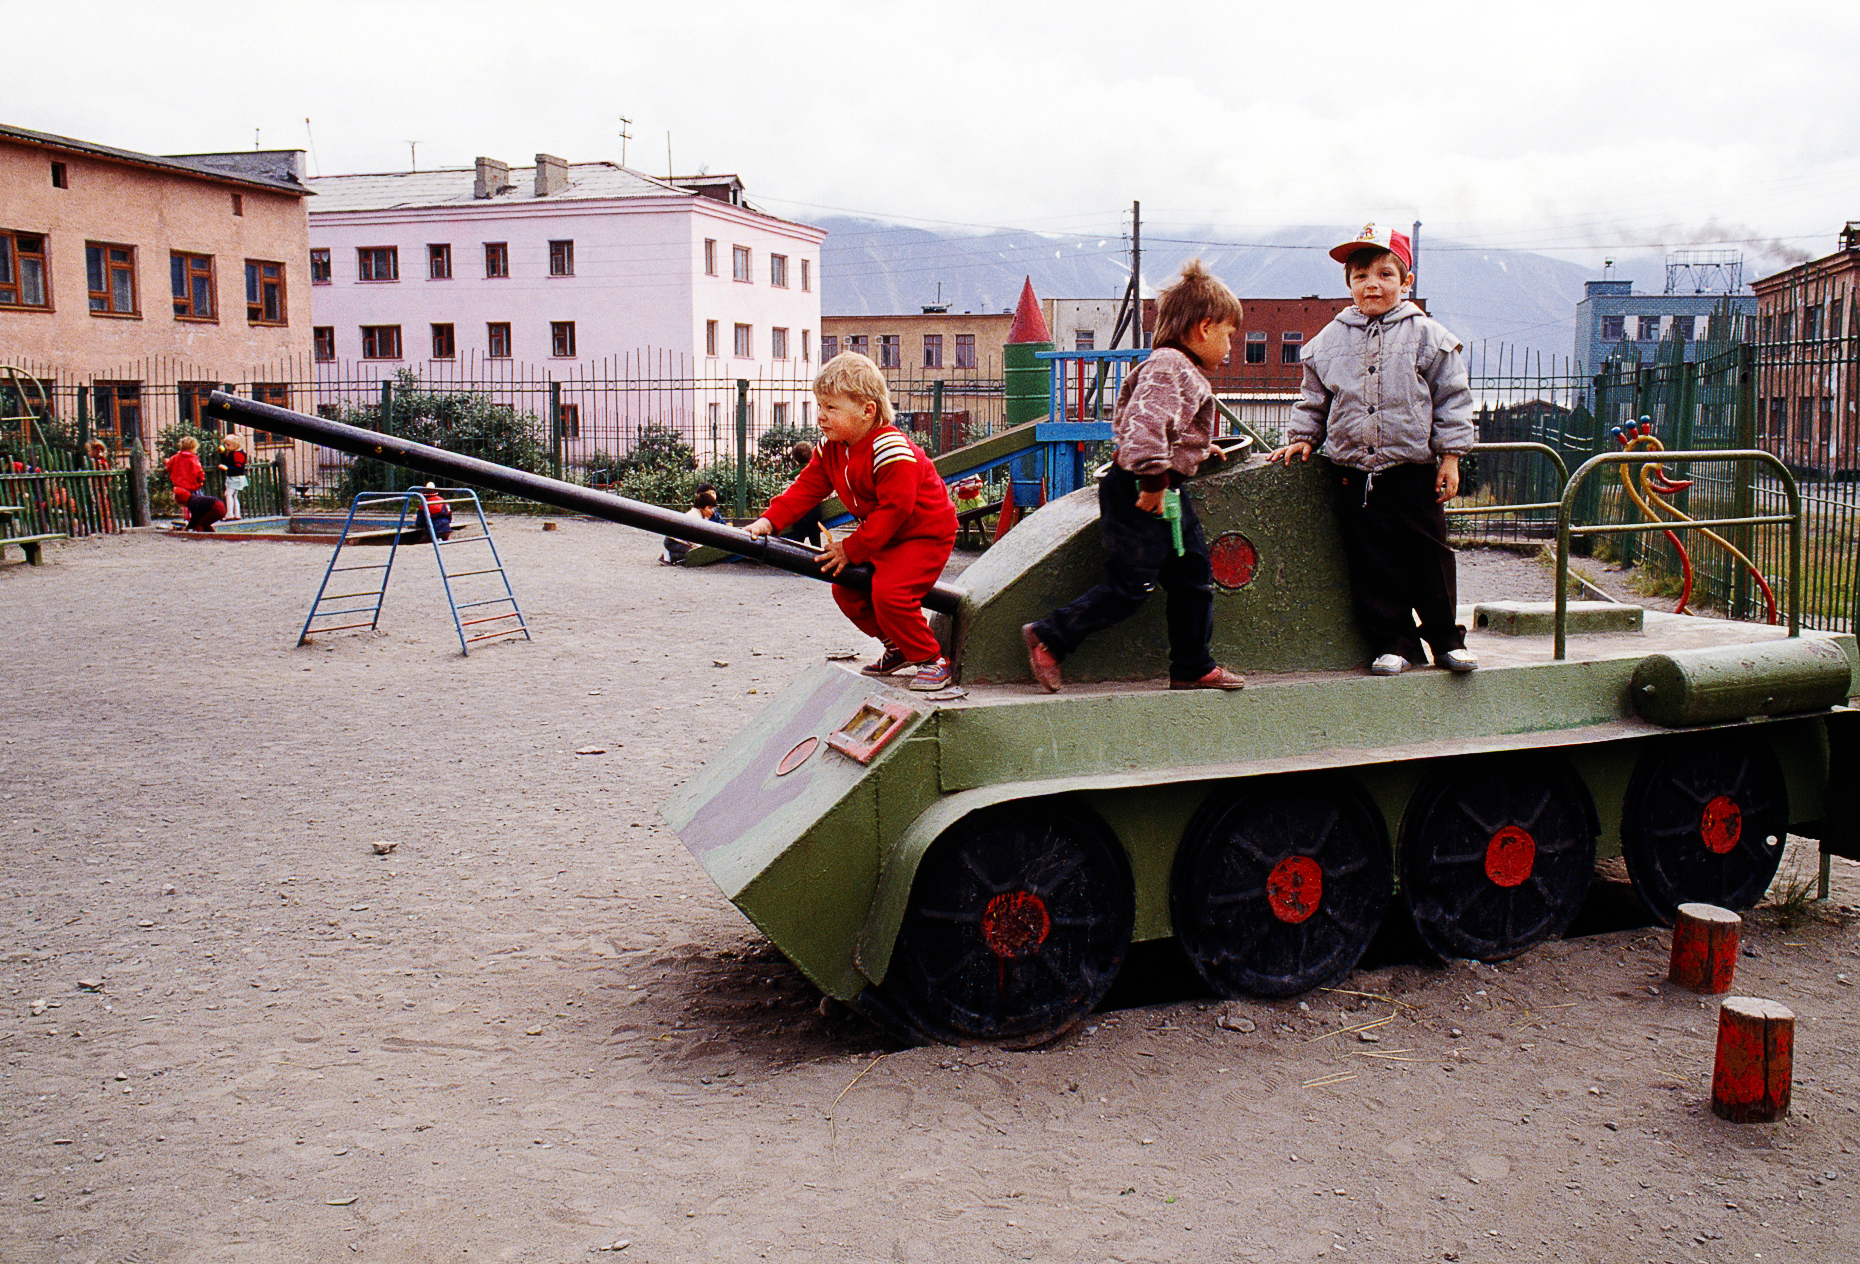 Soviet children playing on a toy tank in a school playground, Eg